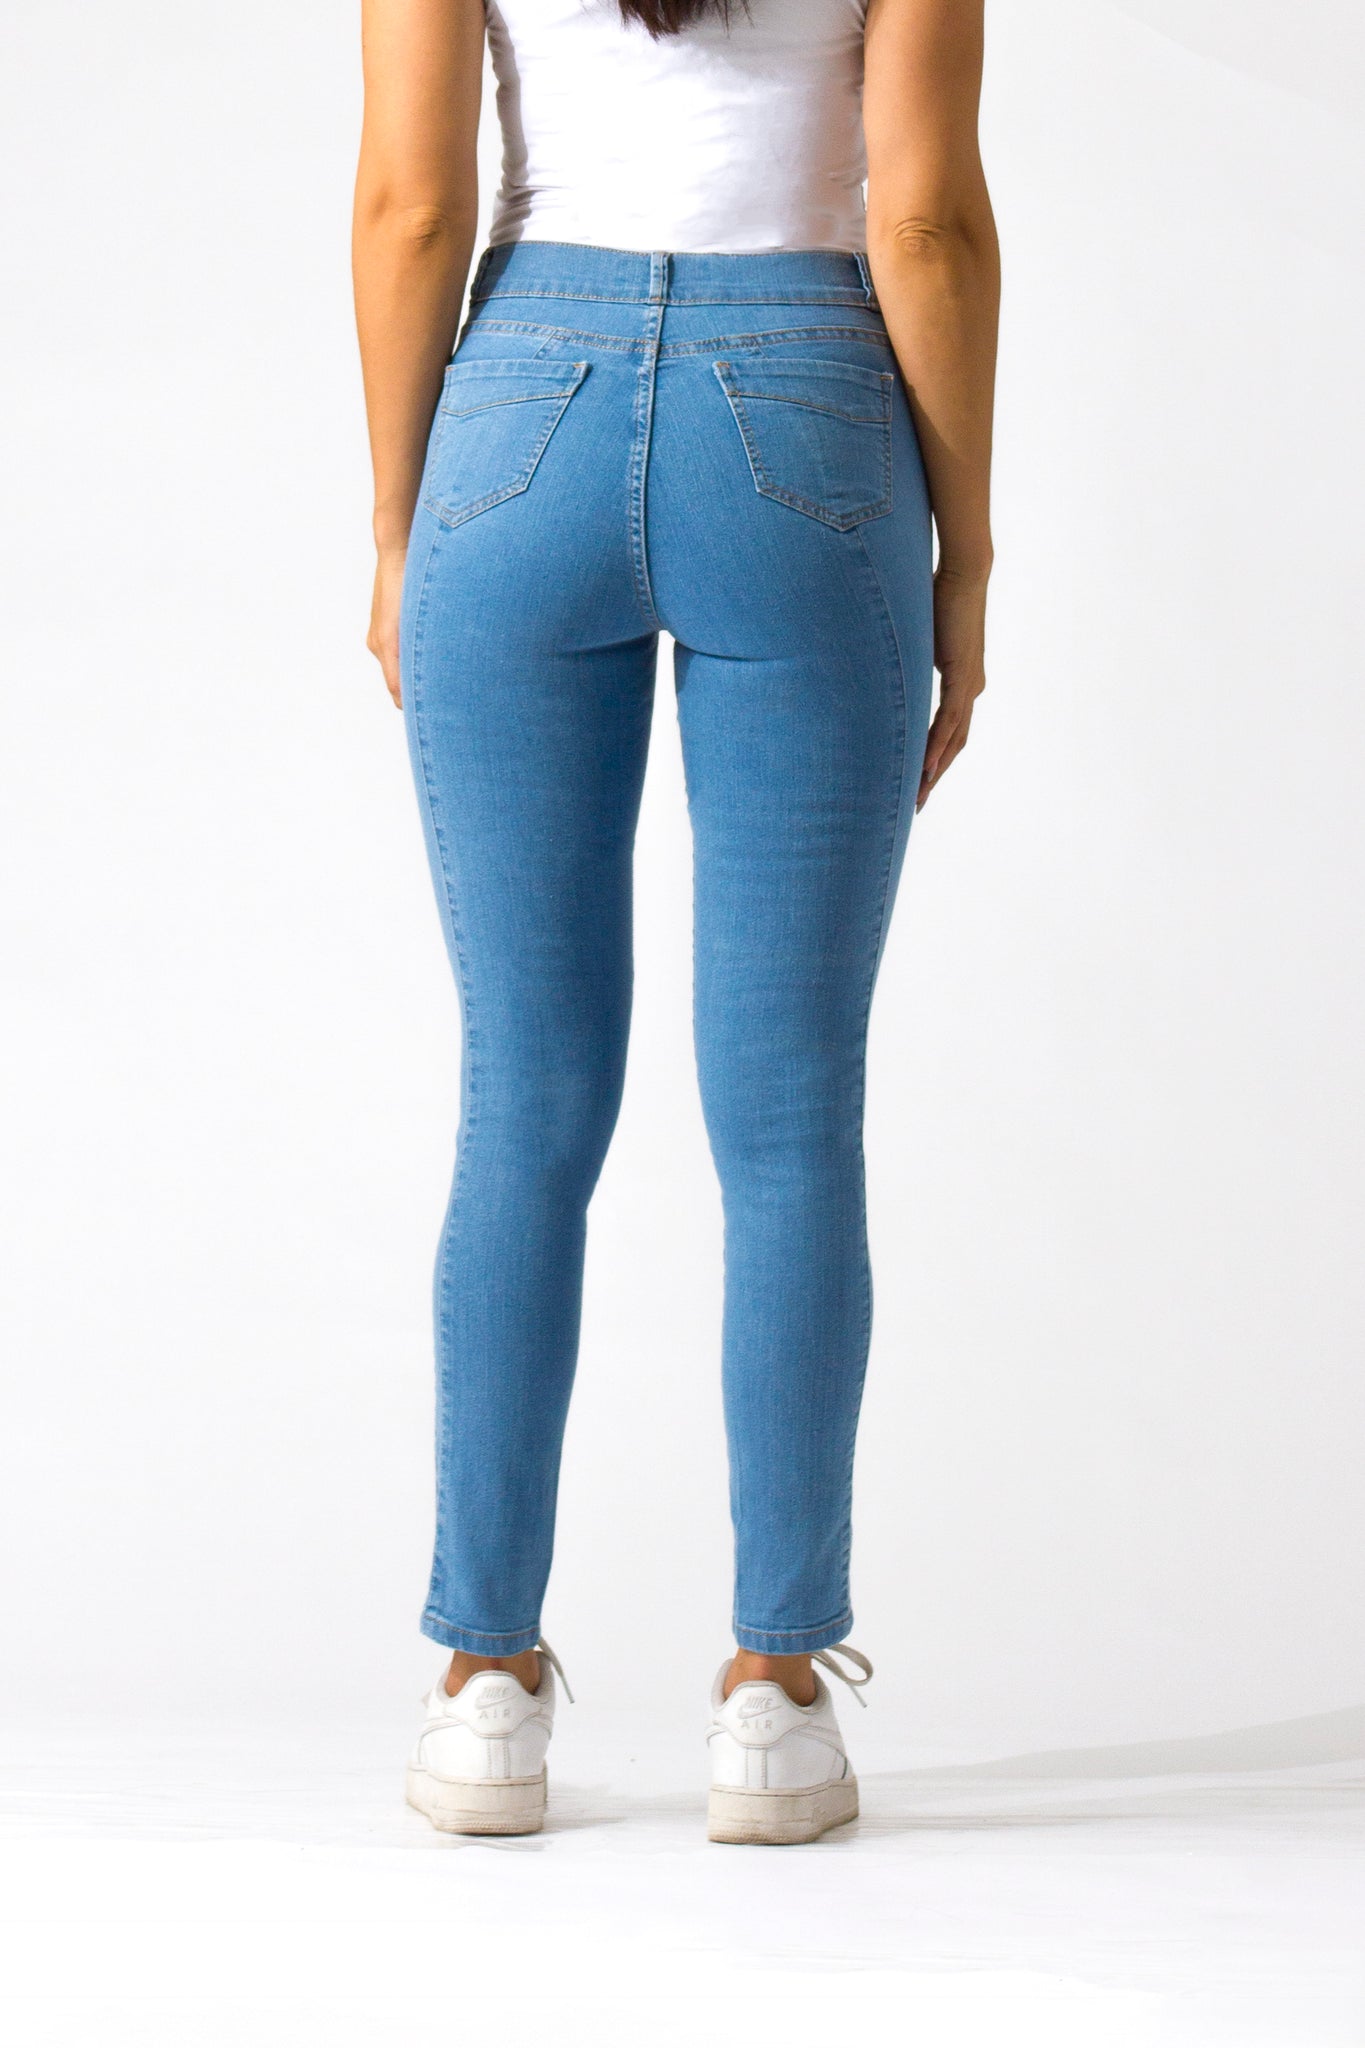 OHPOMP!® Basics, Cintura Media Skinny Jeans Azul Claro D1010